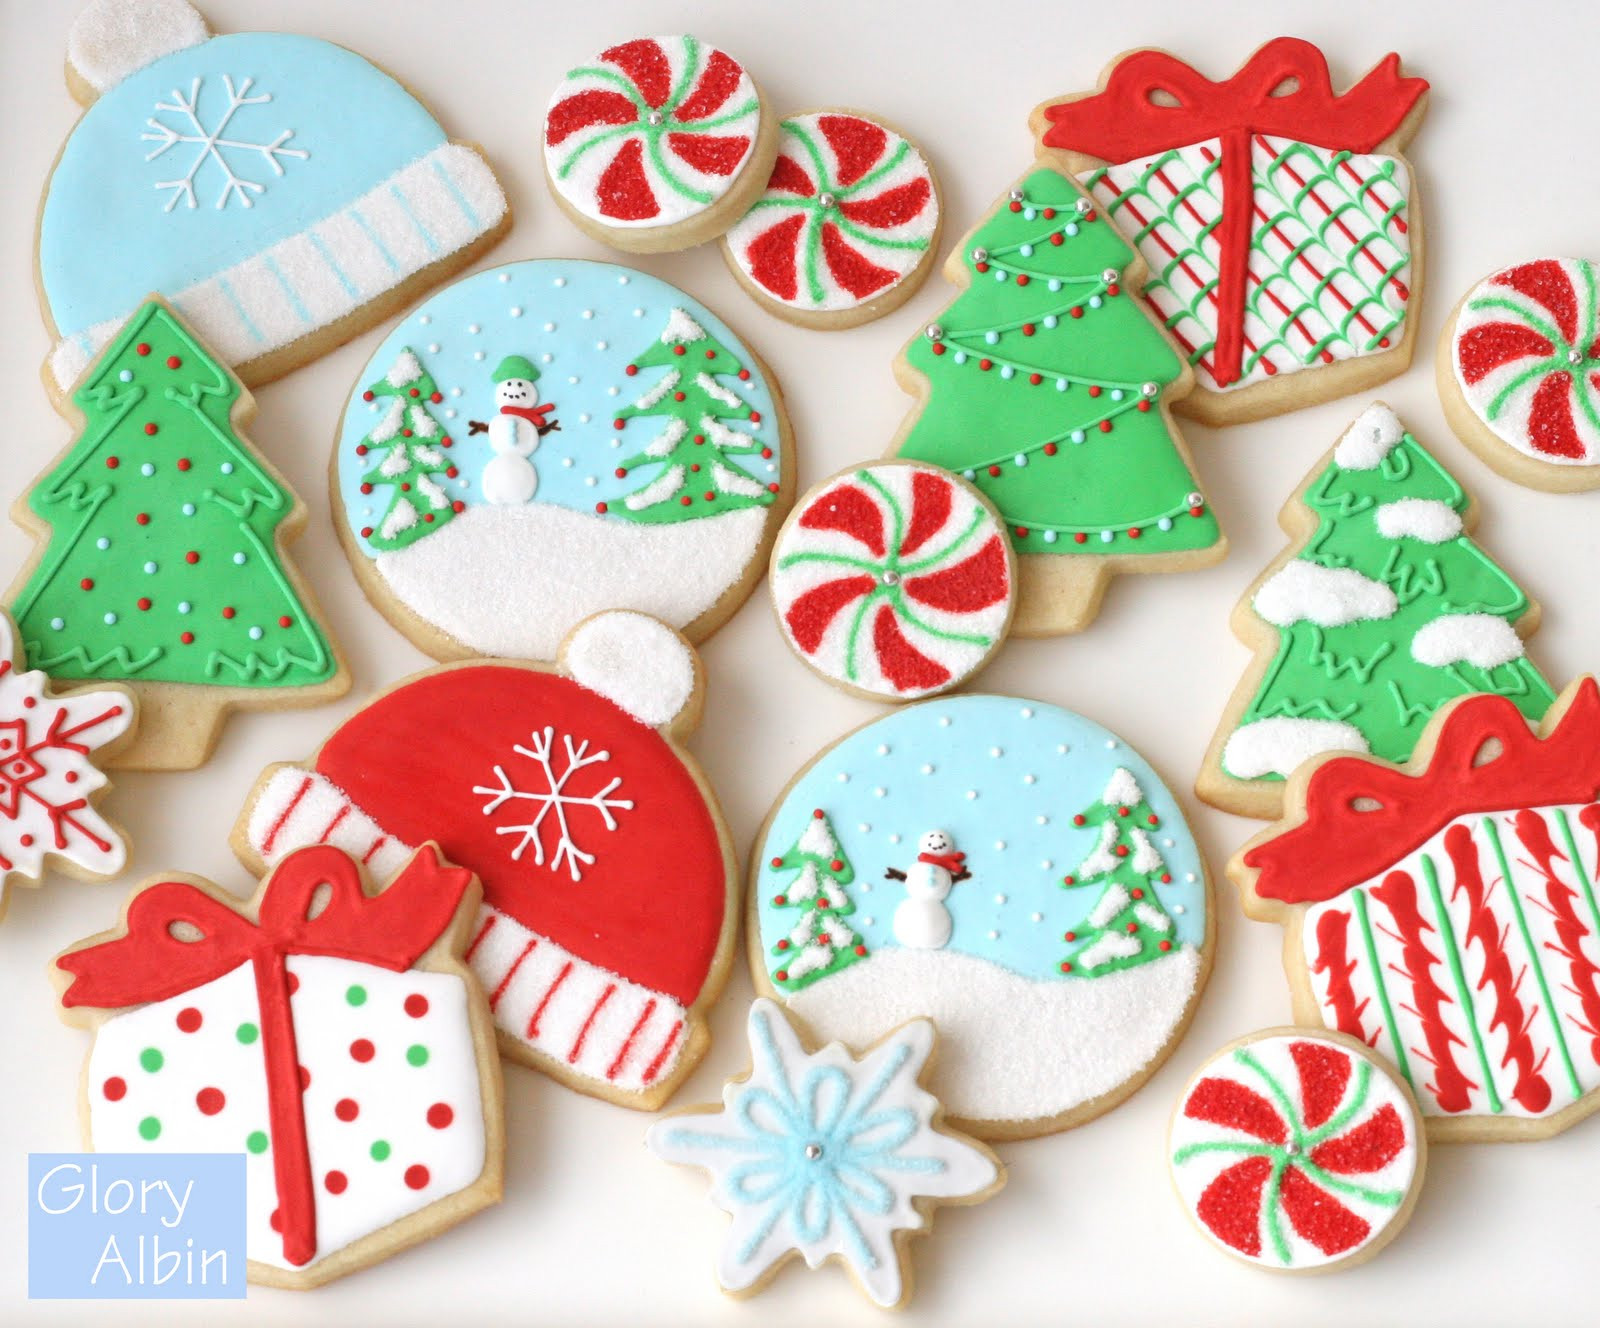 Royal Icing Christmas Cookies
 Decorating Sugar Cookies with Royal Icing – Glorious Treats